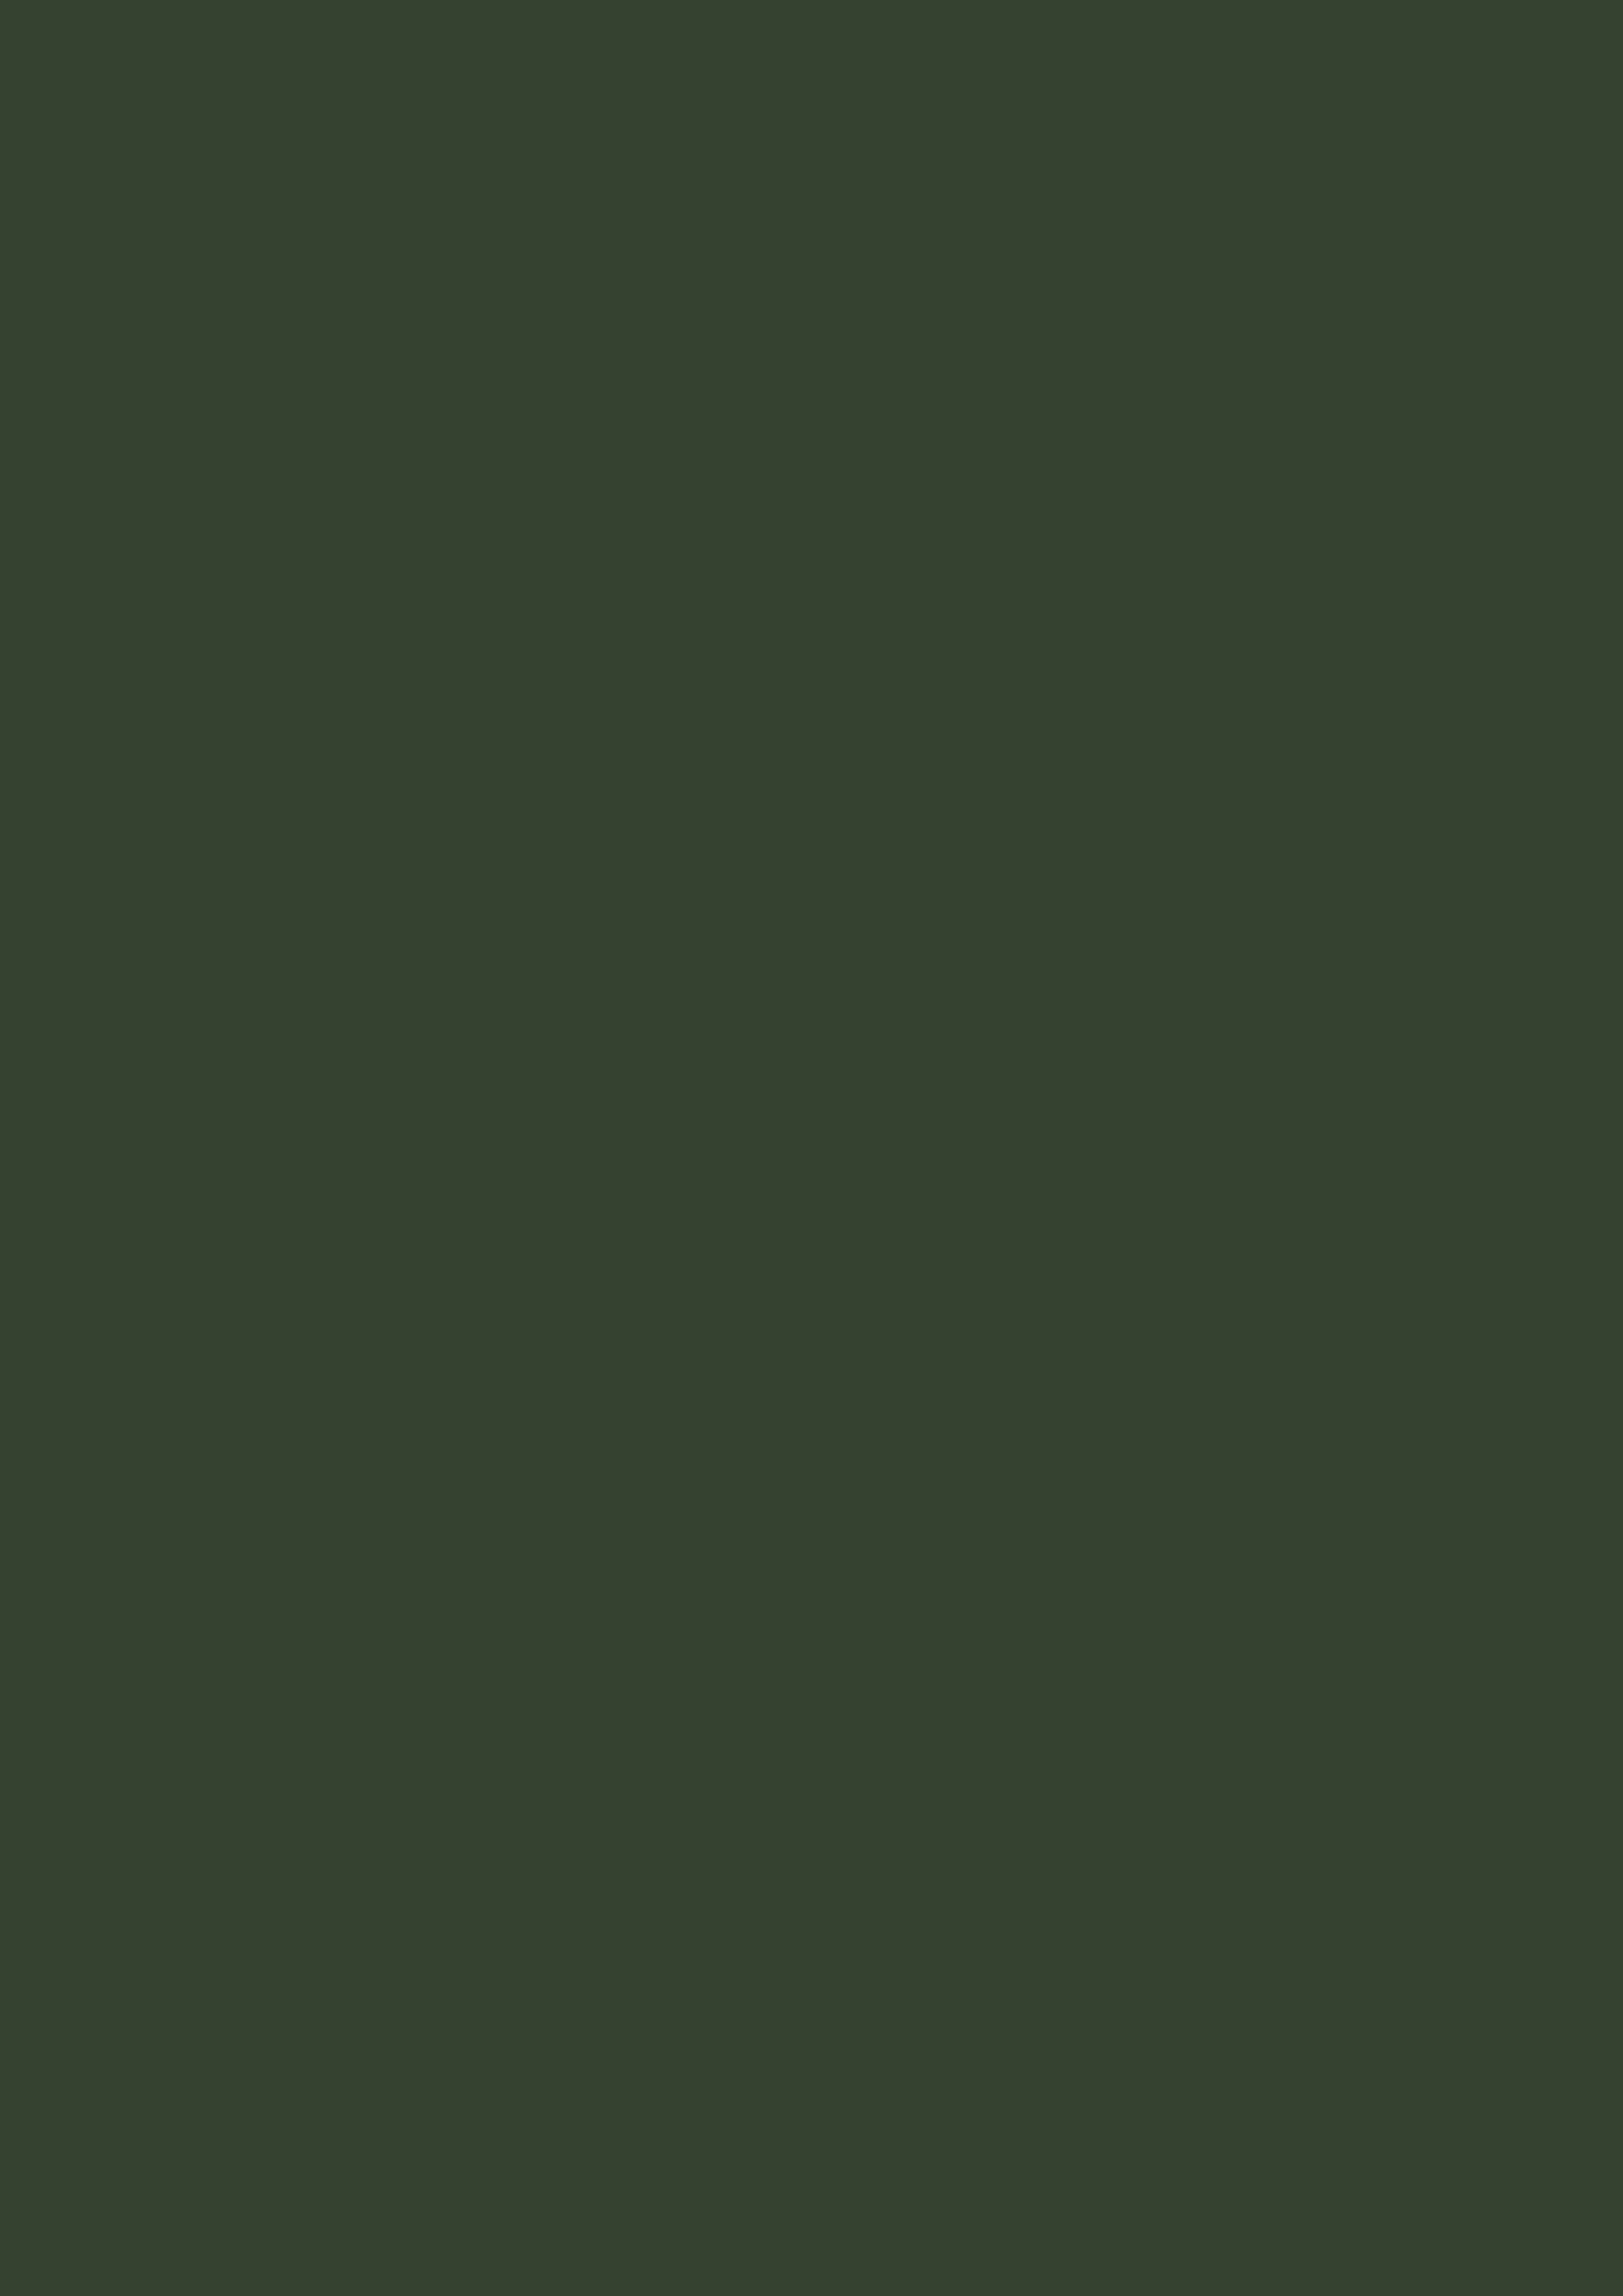 2480x3508 Kombu Green Solid Color Background